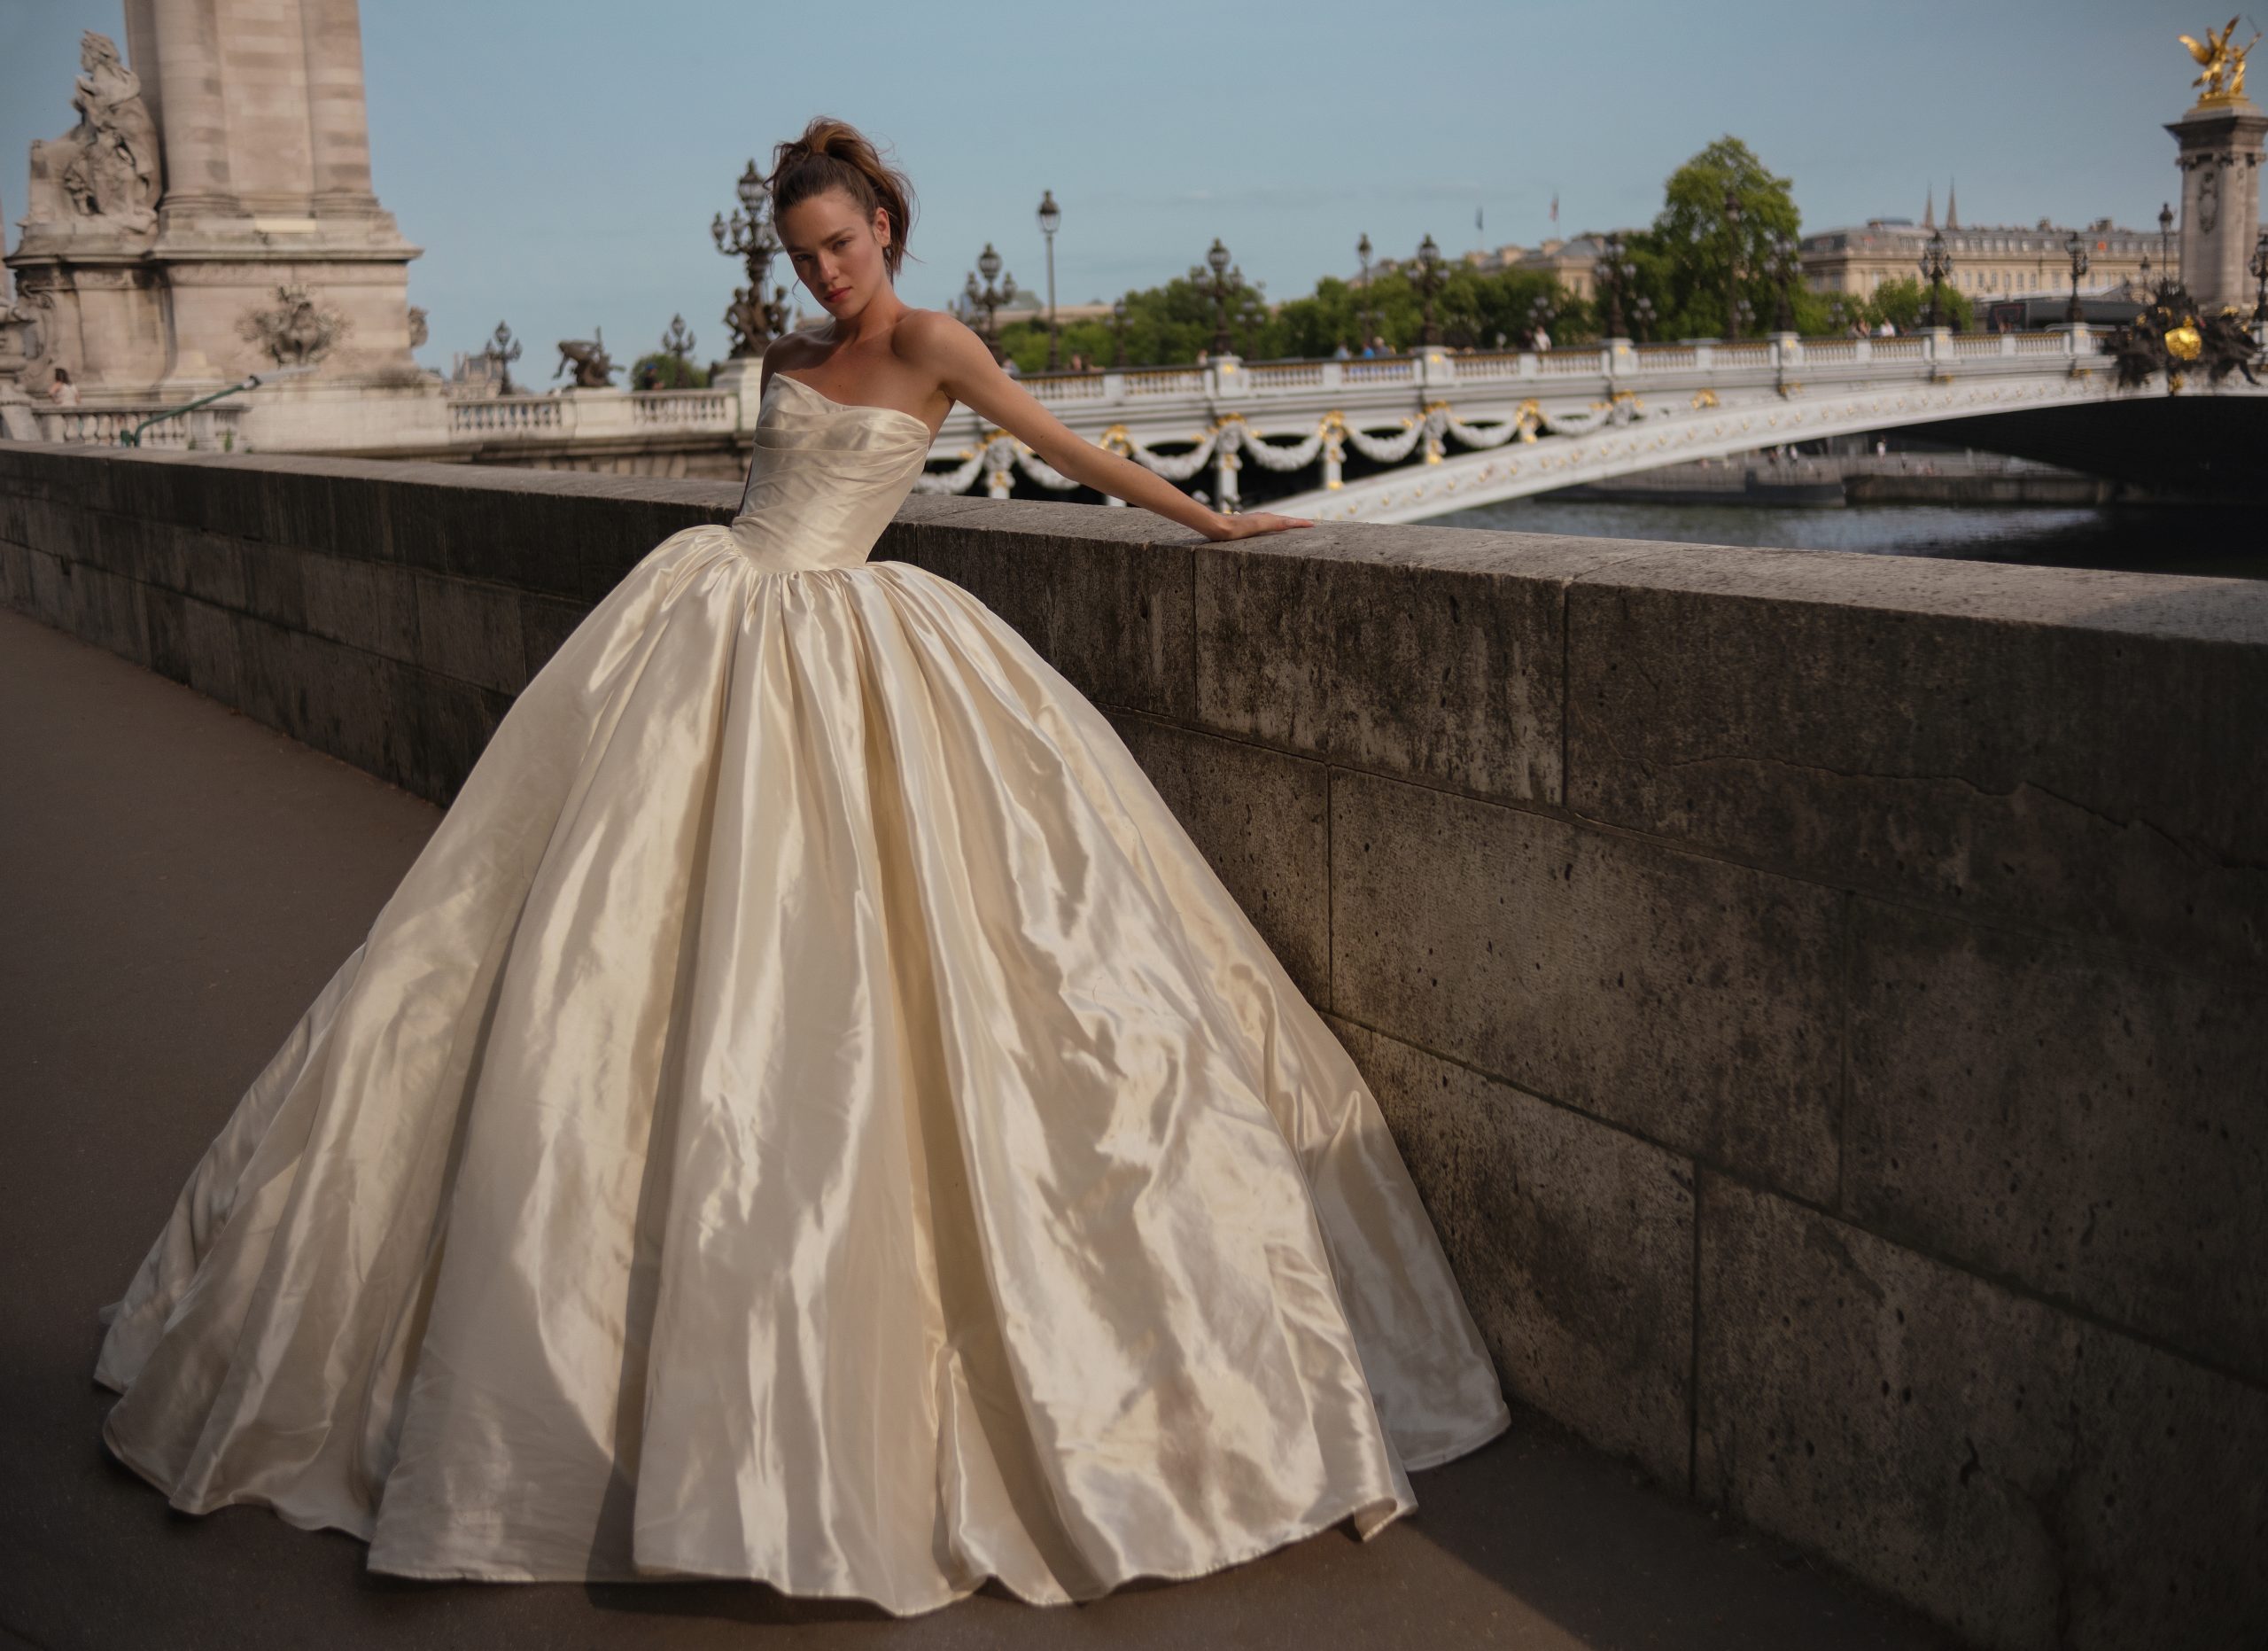 Strapless Ball Gown Wedding Dress | Kleinfeld Bridal